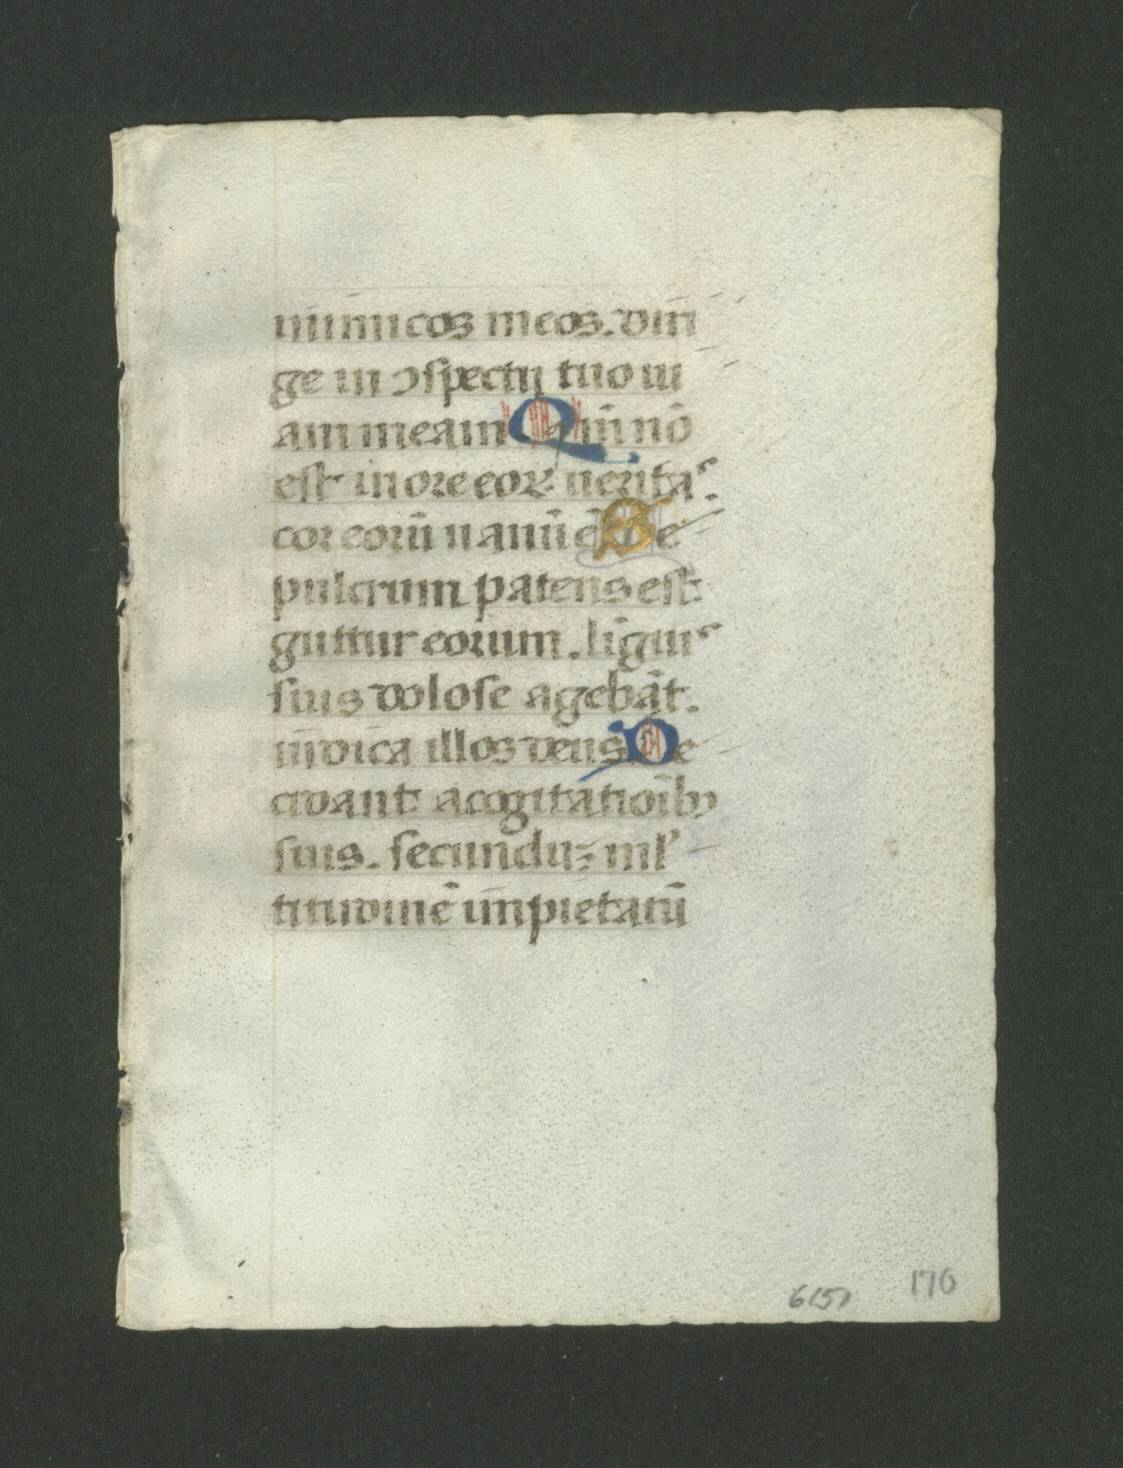 Pazzi Book of Hours - folio 170 recto